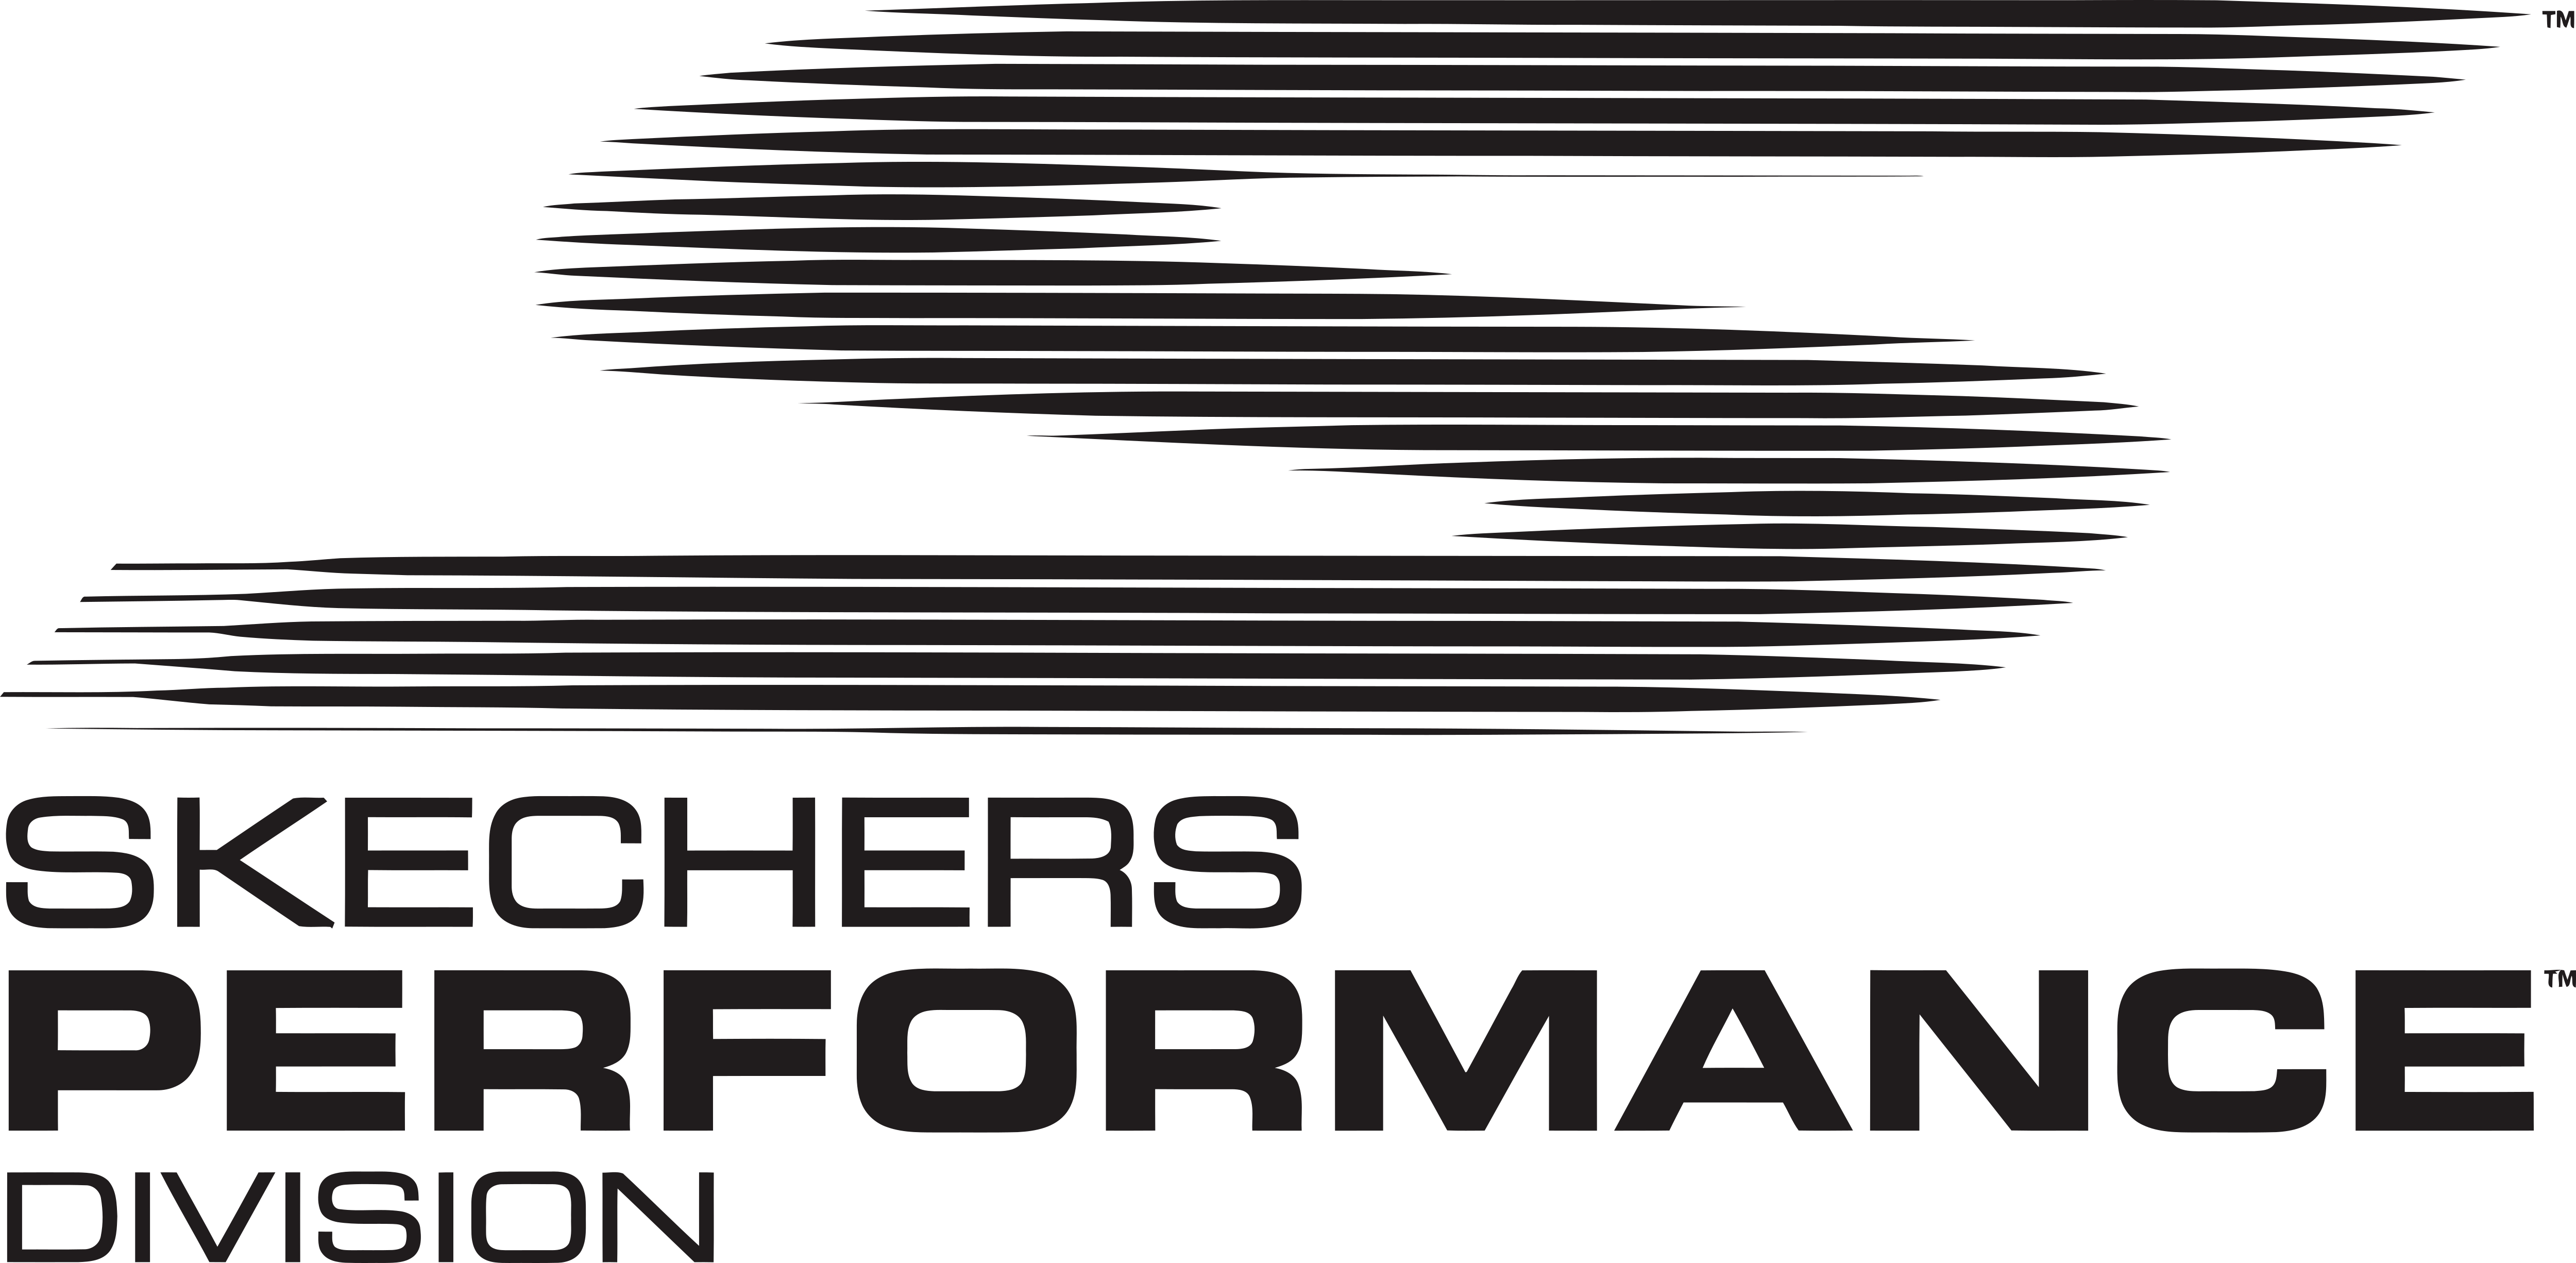 Skechers Logo Png Download - 